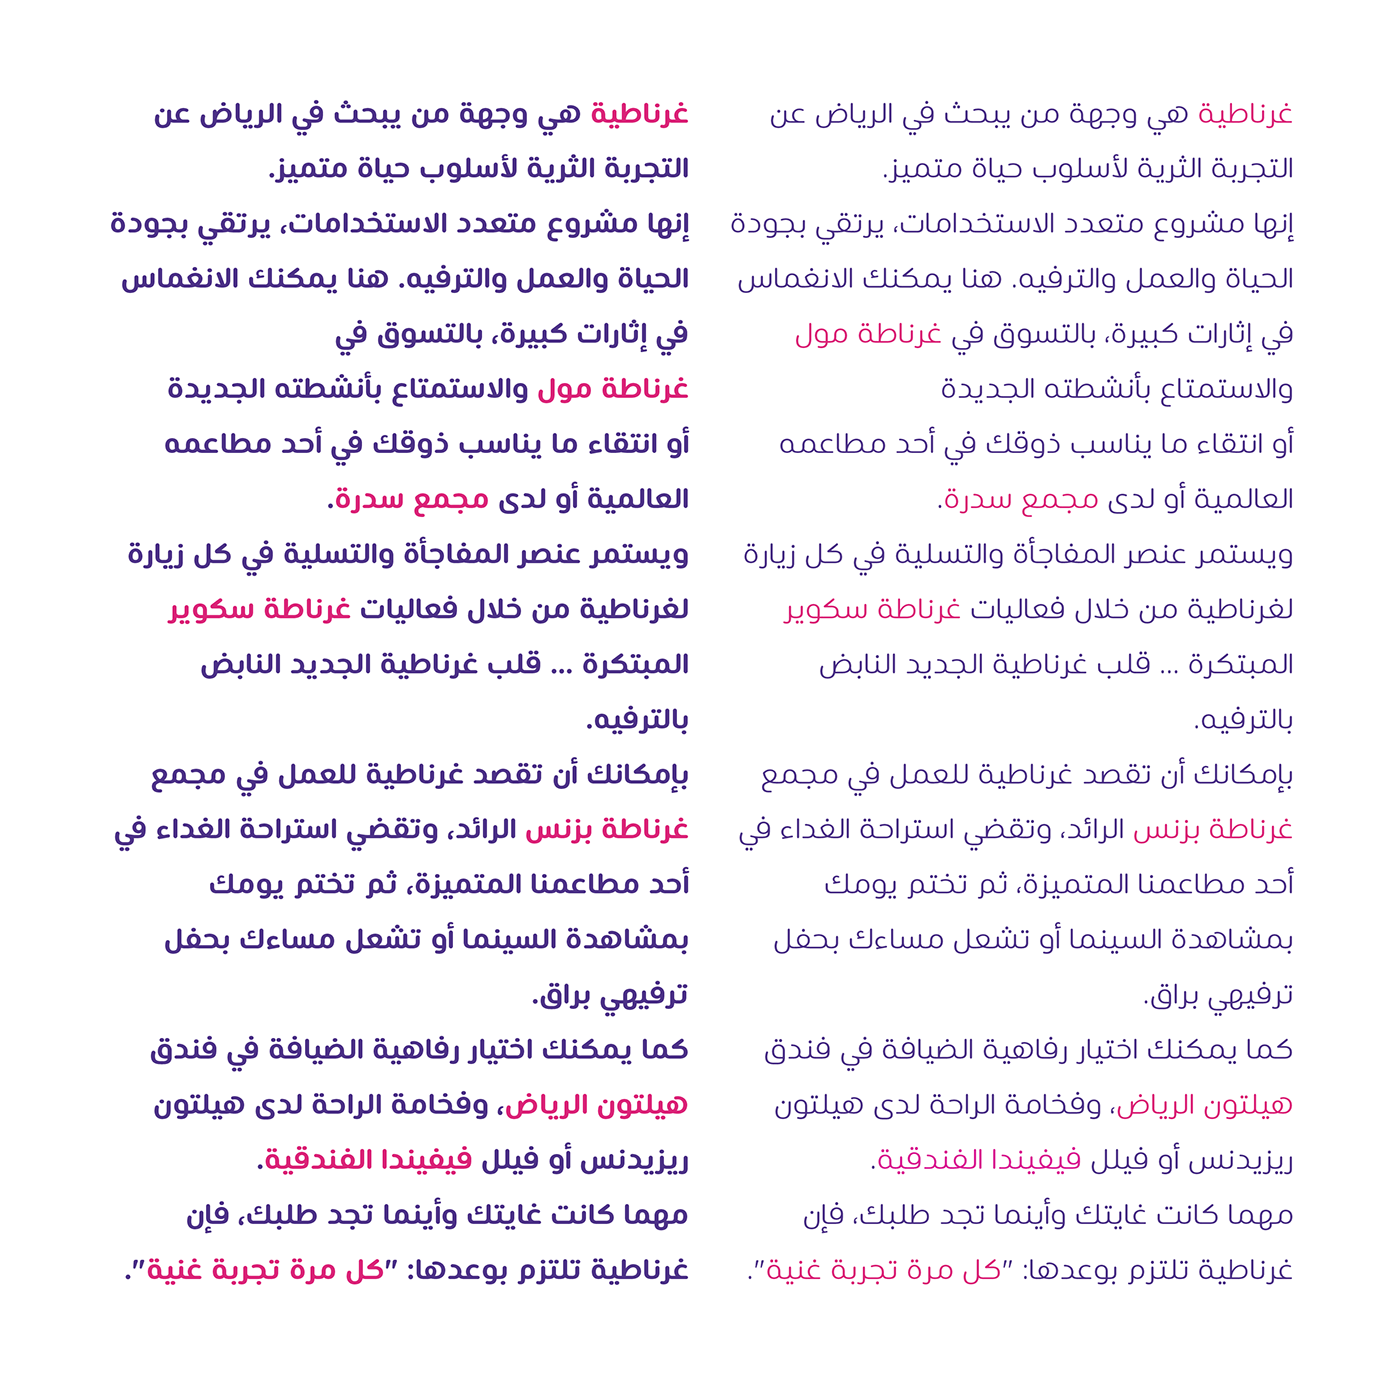 arabic Typeface font new round branding  riyadh